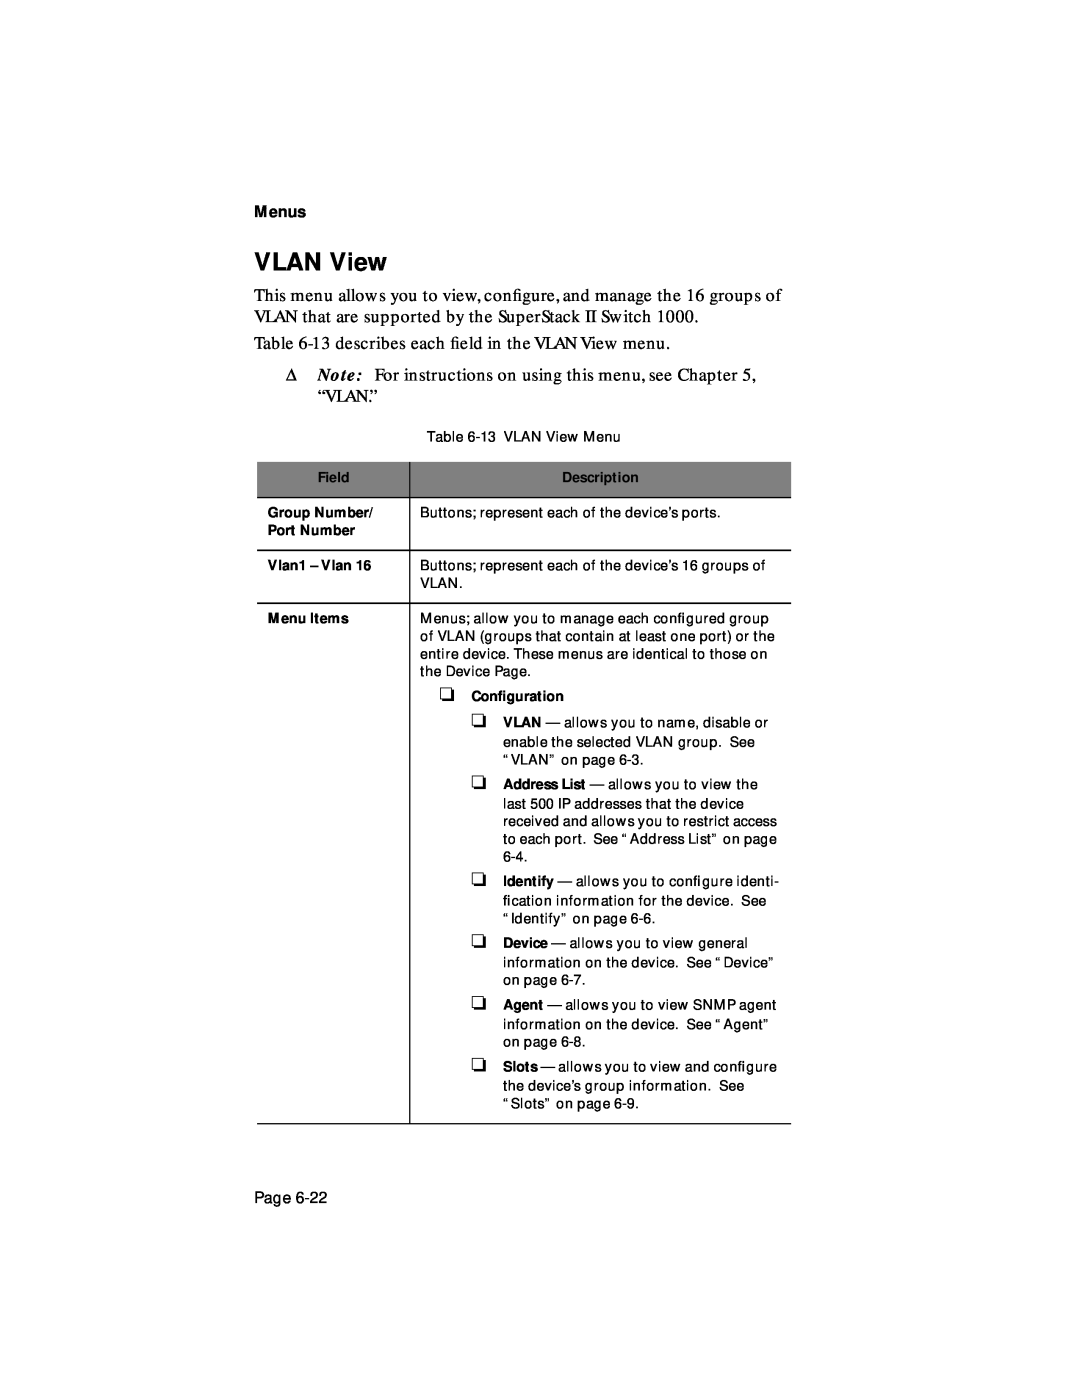 Asante Technologies 1000 user manual 13 describes each ﬁeld in the VLAN View menu, Menus, Page 